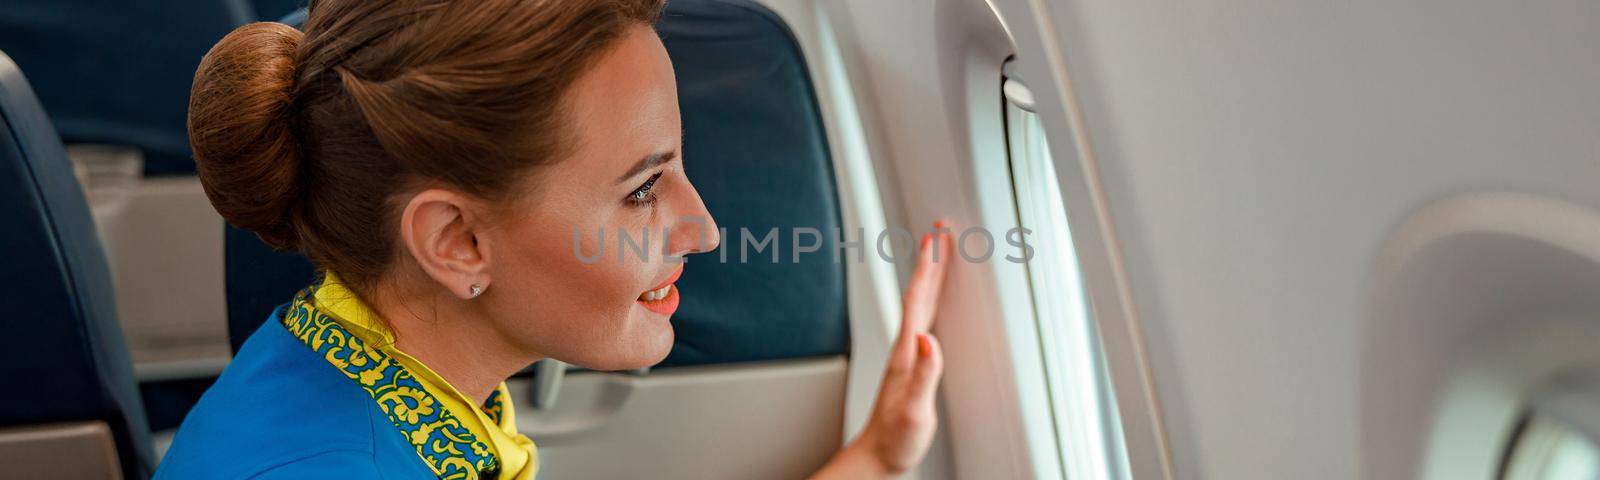 Joyful woman stewardess looking out the window in airplane by Yaroslav_astakhov